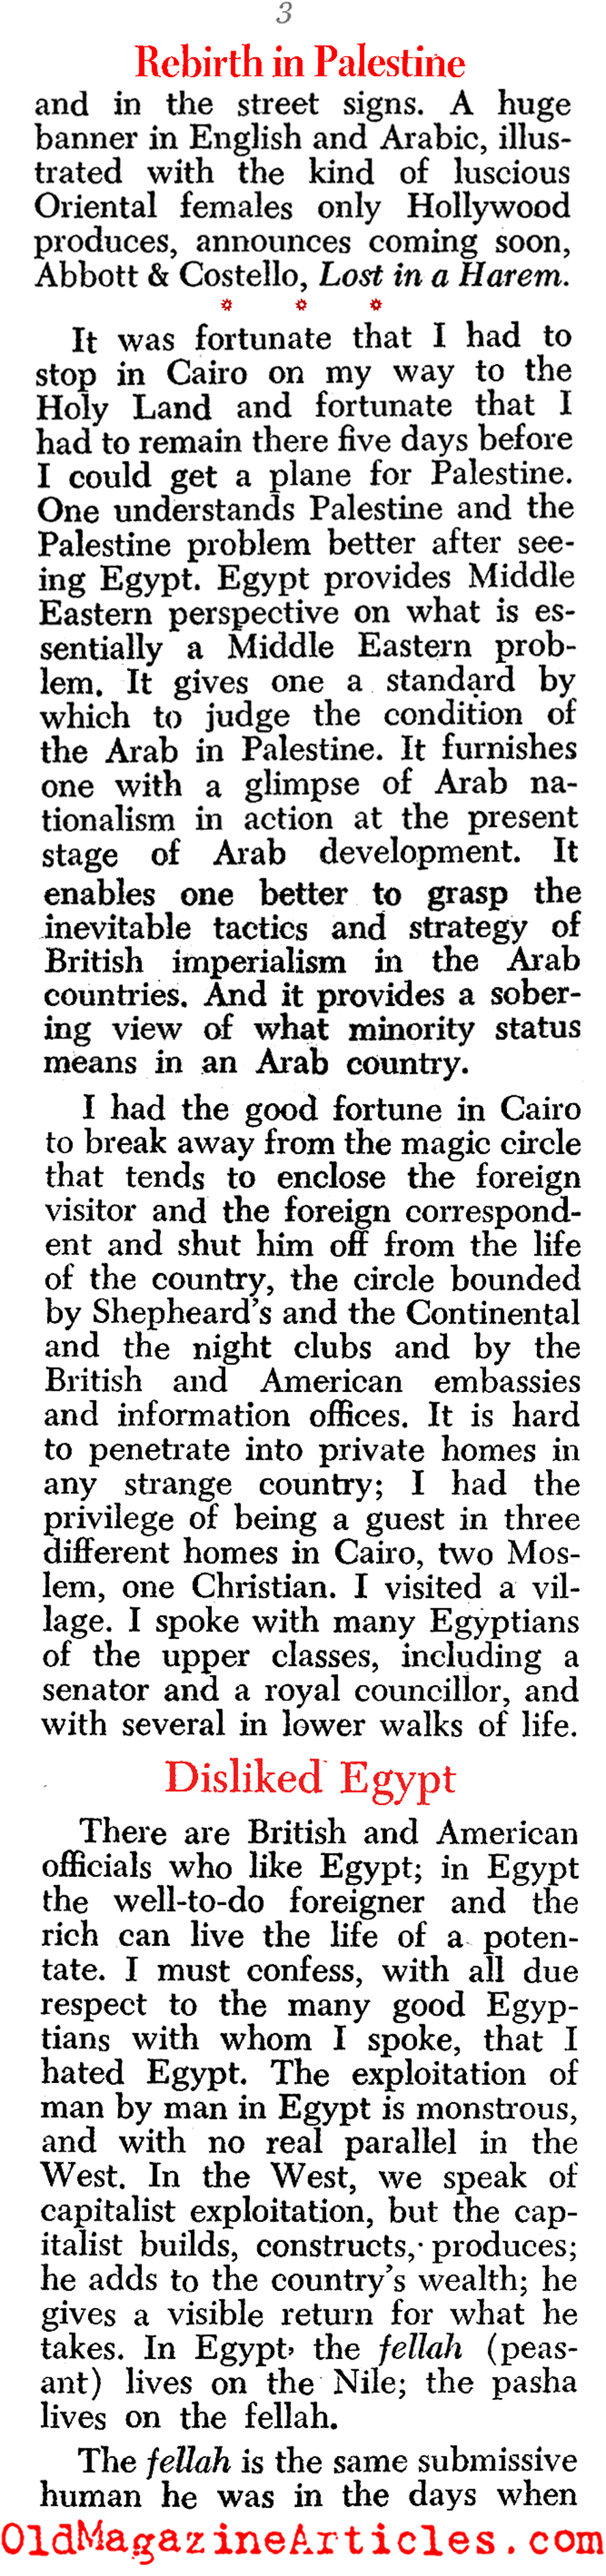 Arab Population Growth as Israel is Reborn (PM Tabloid, 1945)